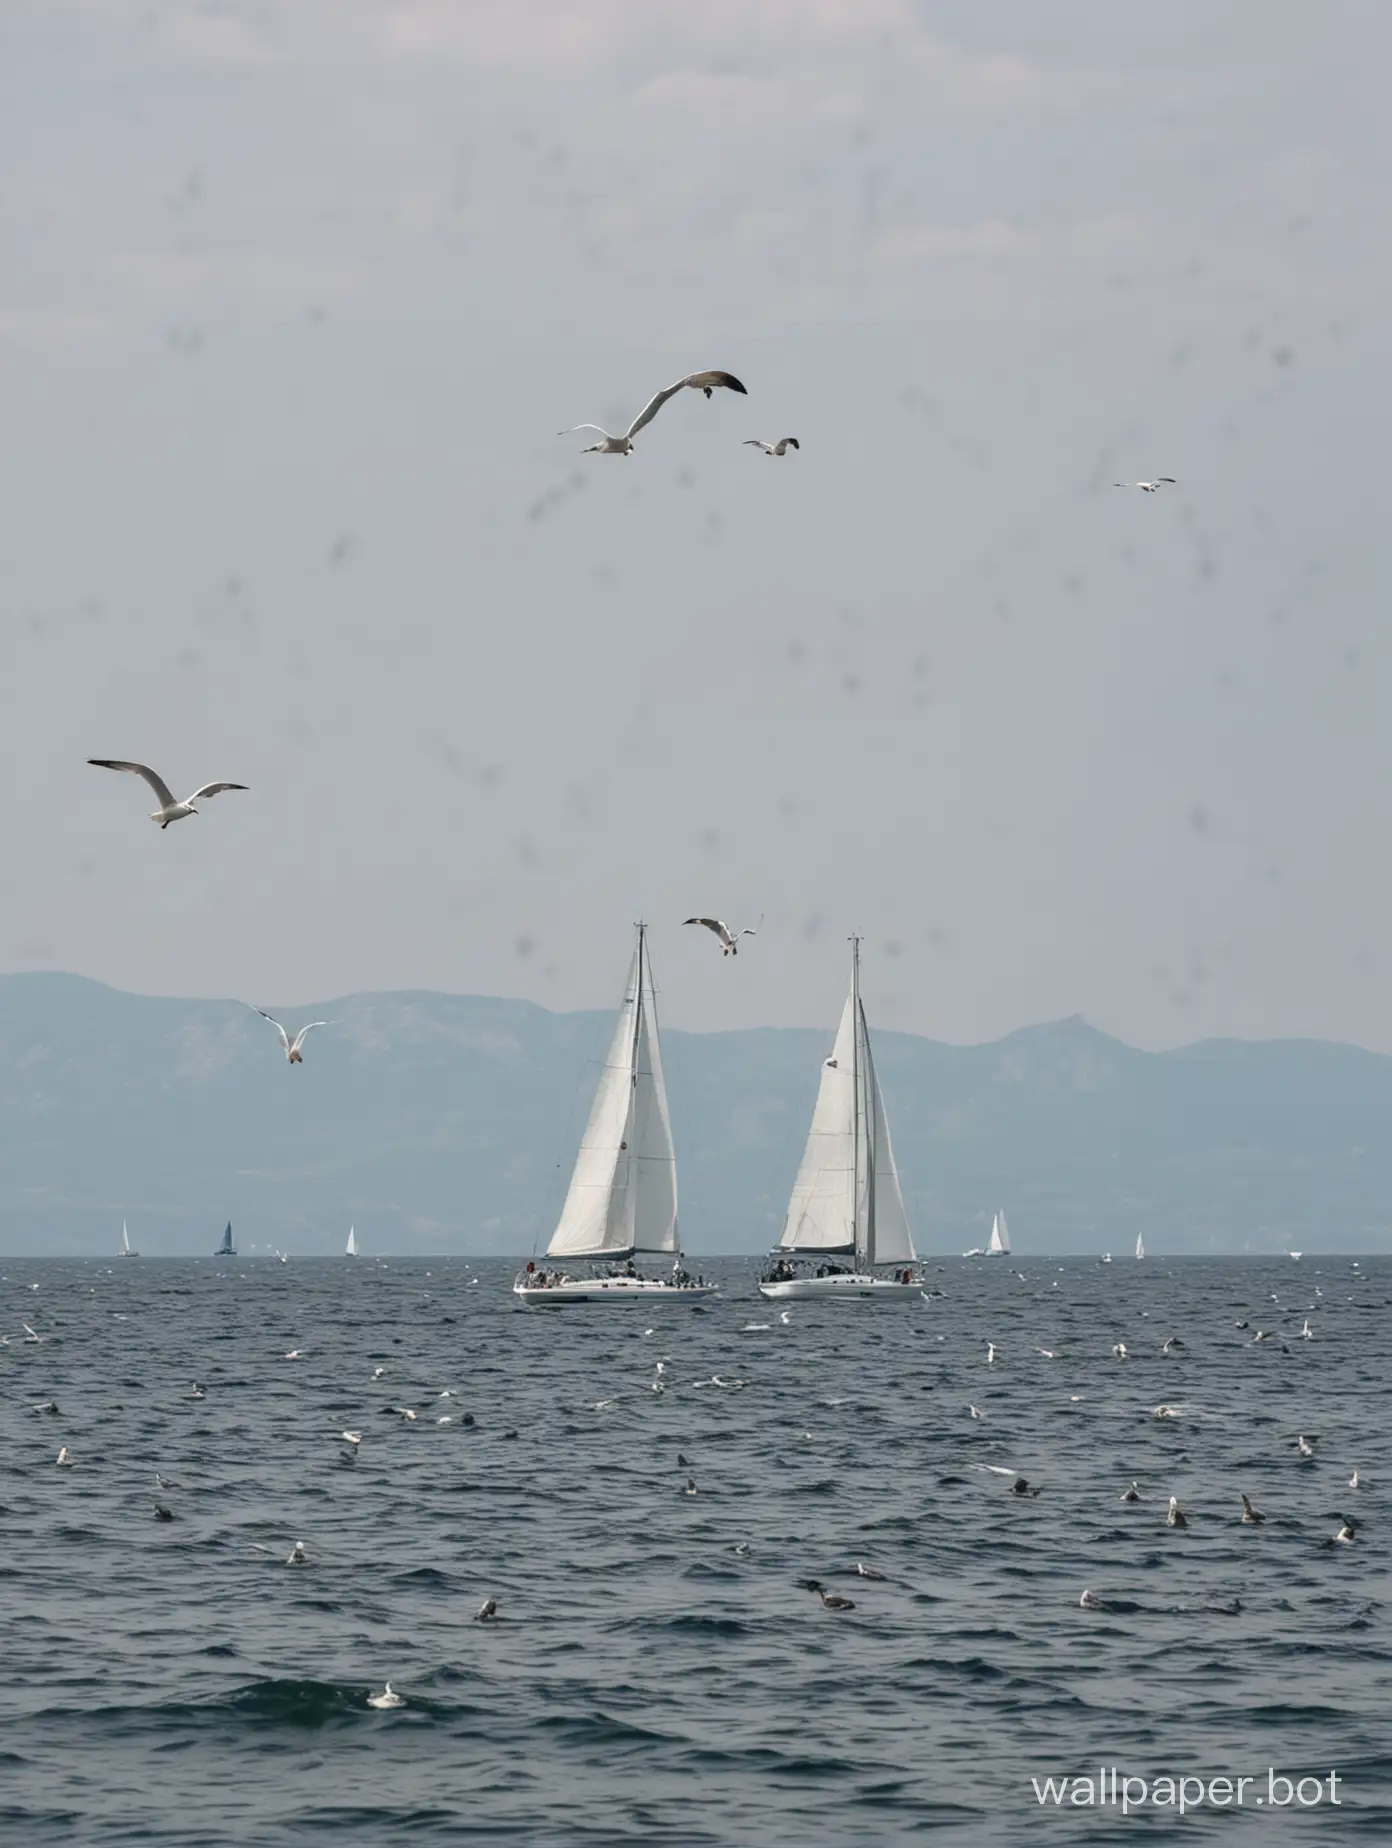 Black Sea, Crimea, white sailing yacht in the distance, several seagulls